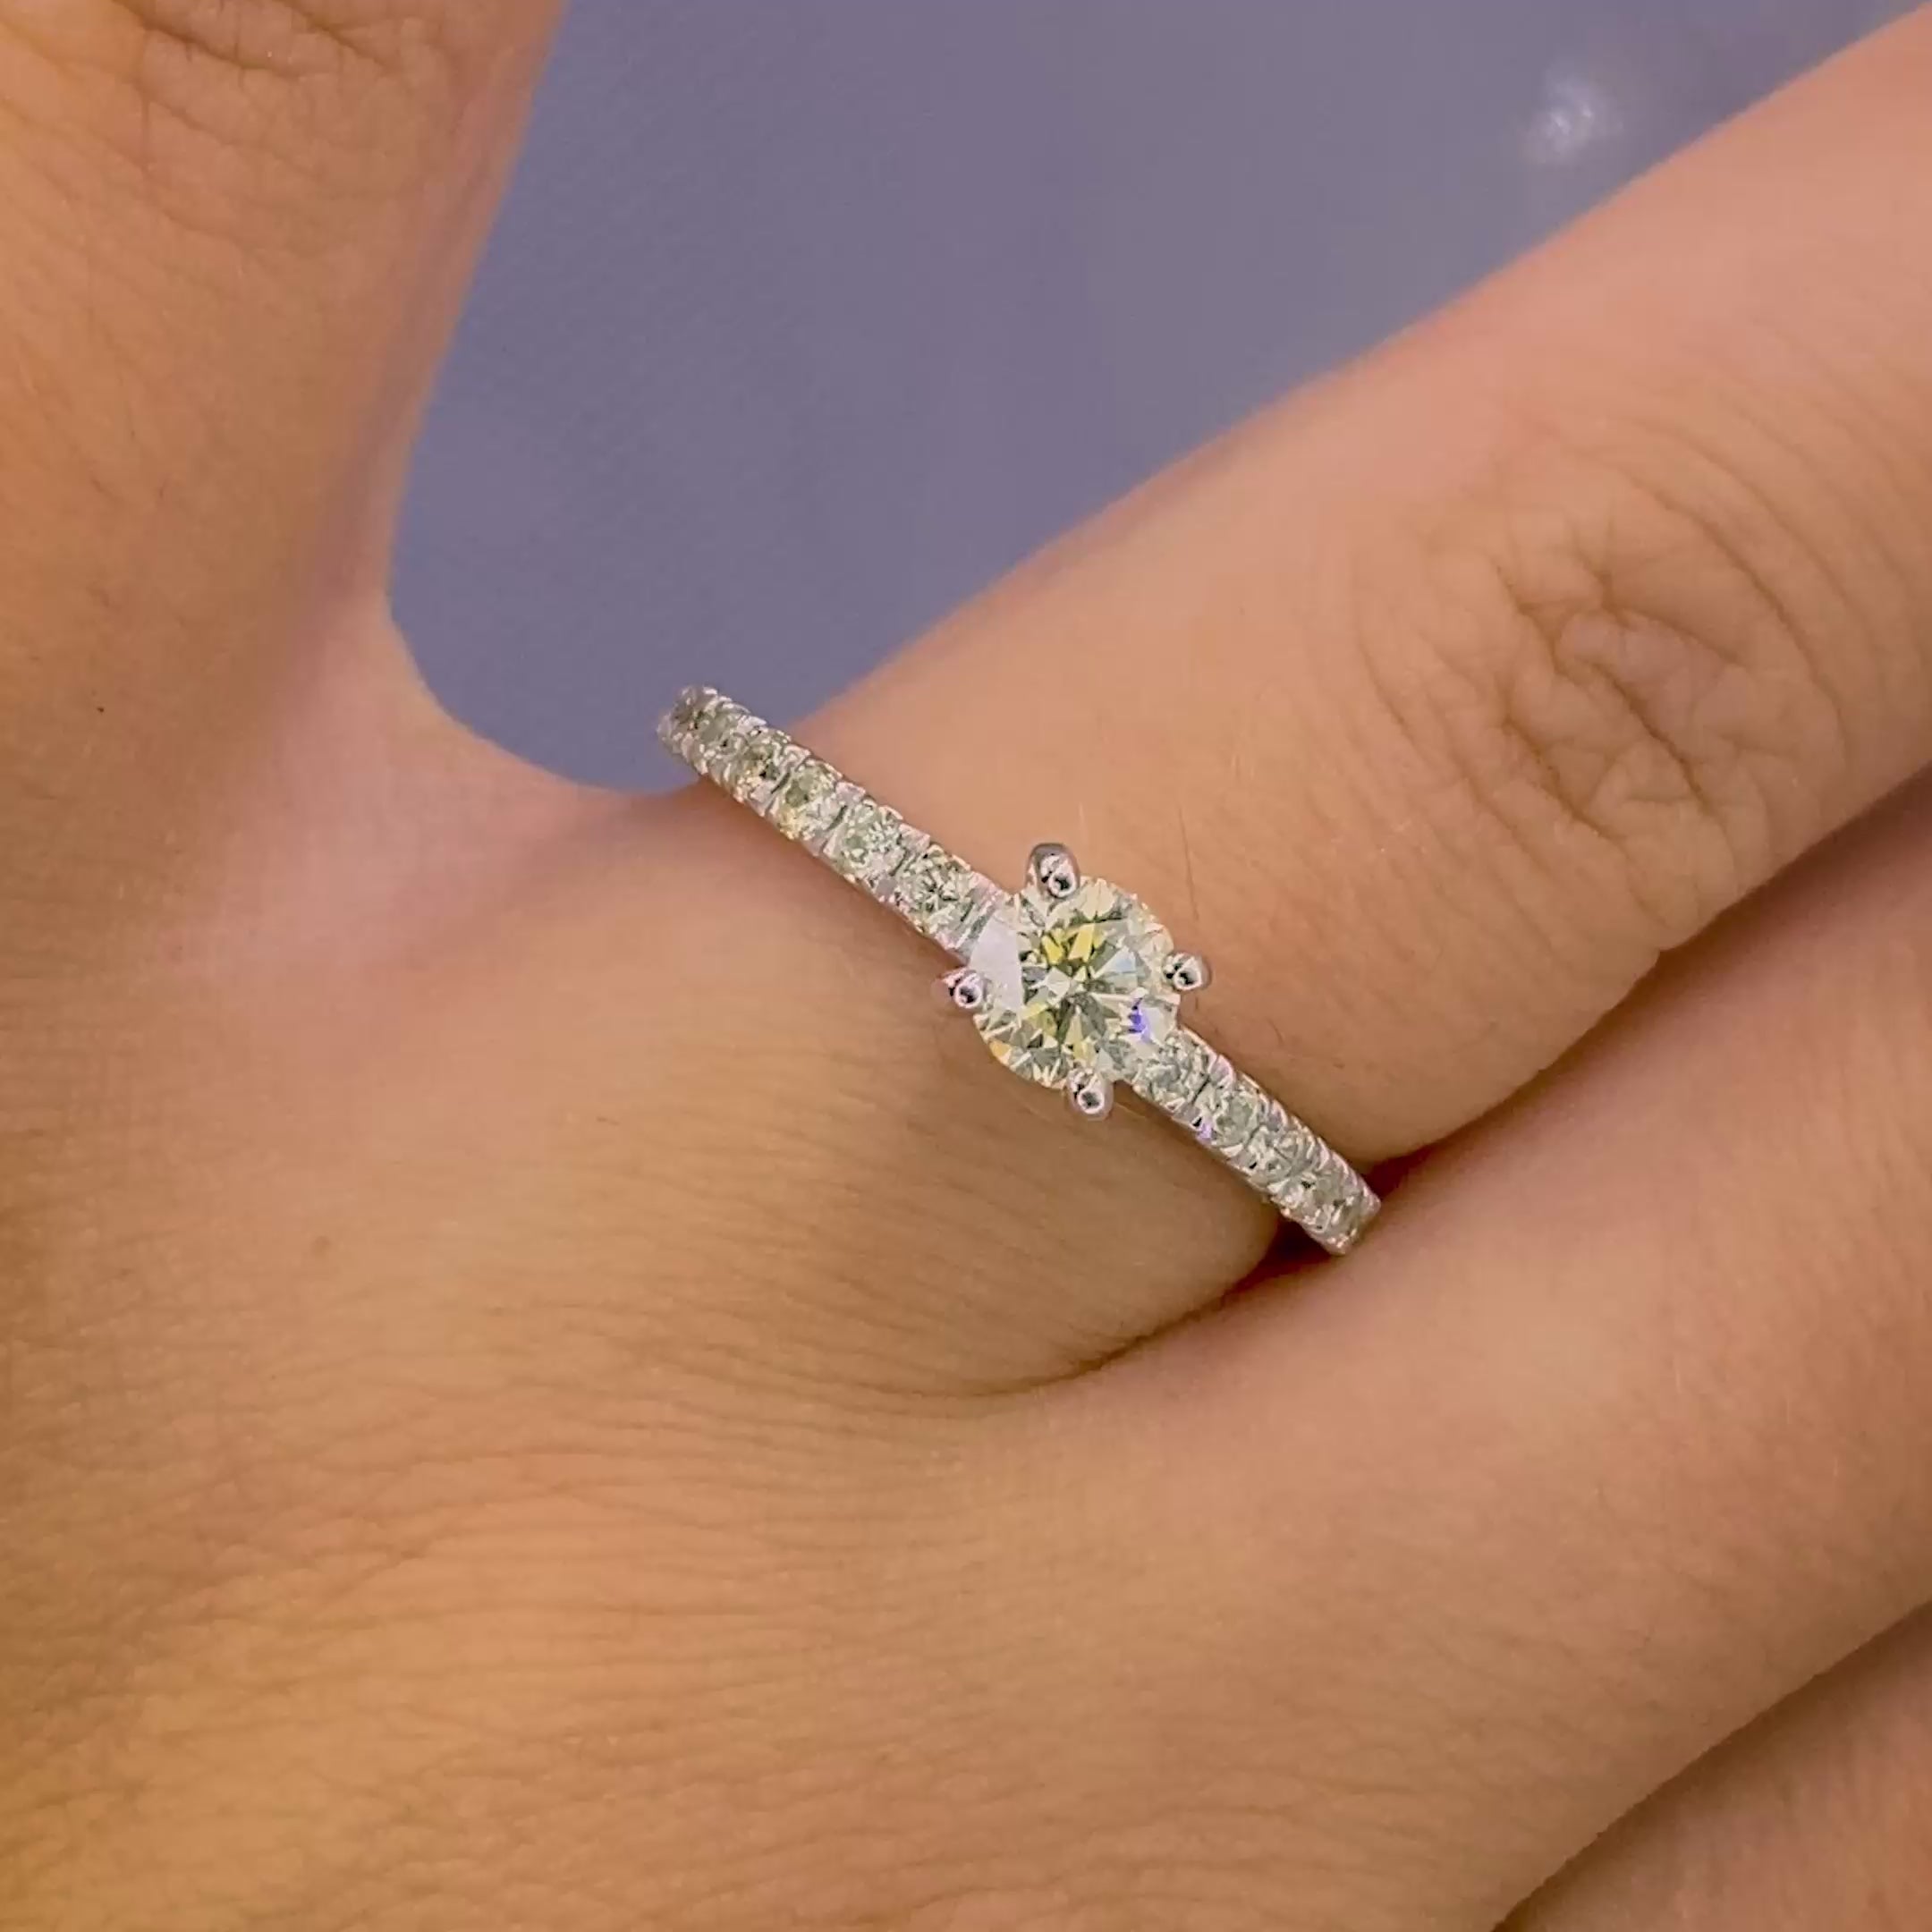 Distinctive 0.95 CT Round Cut Diamond Engagement Ring in 14KT White Gold